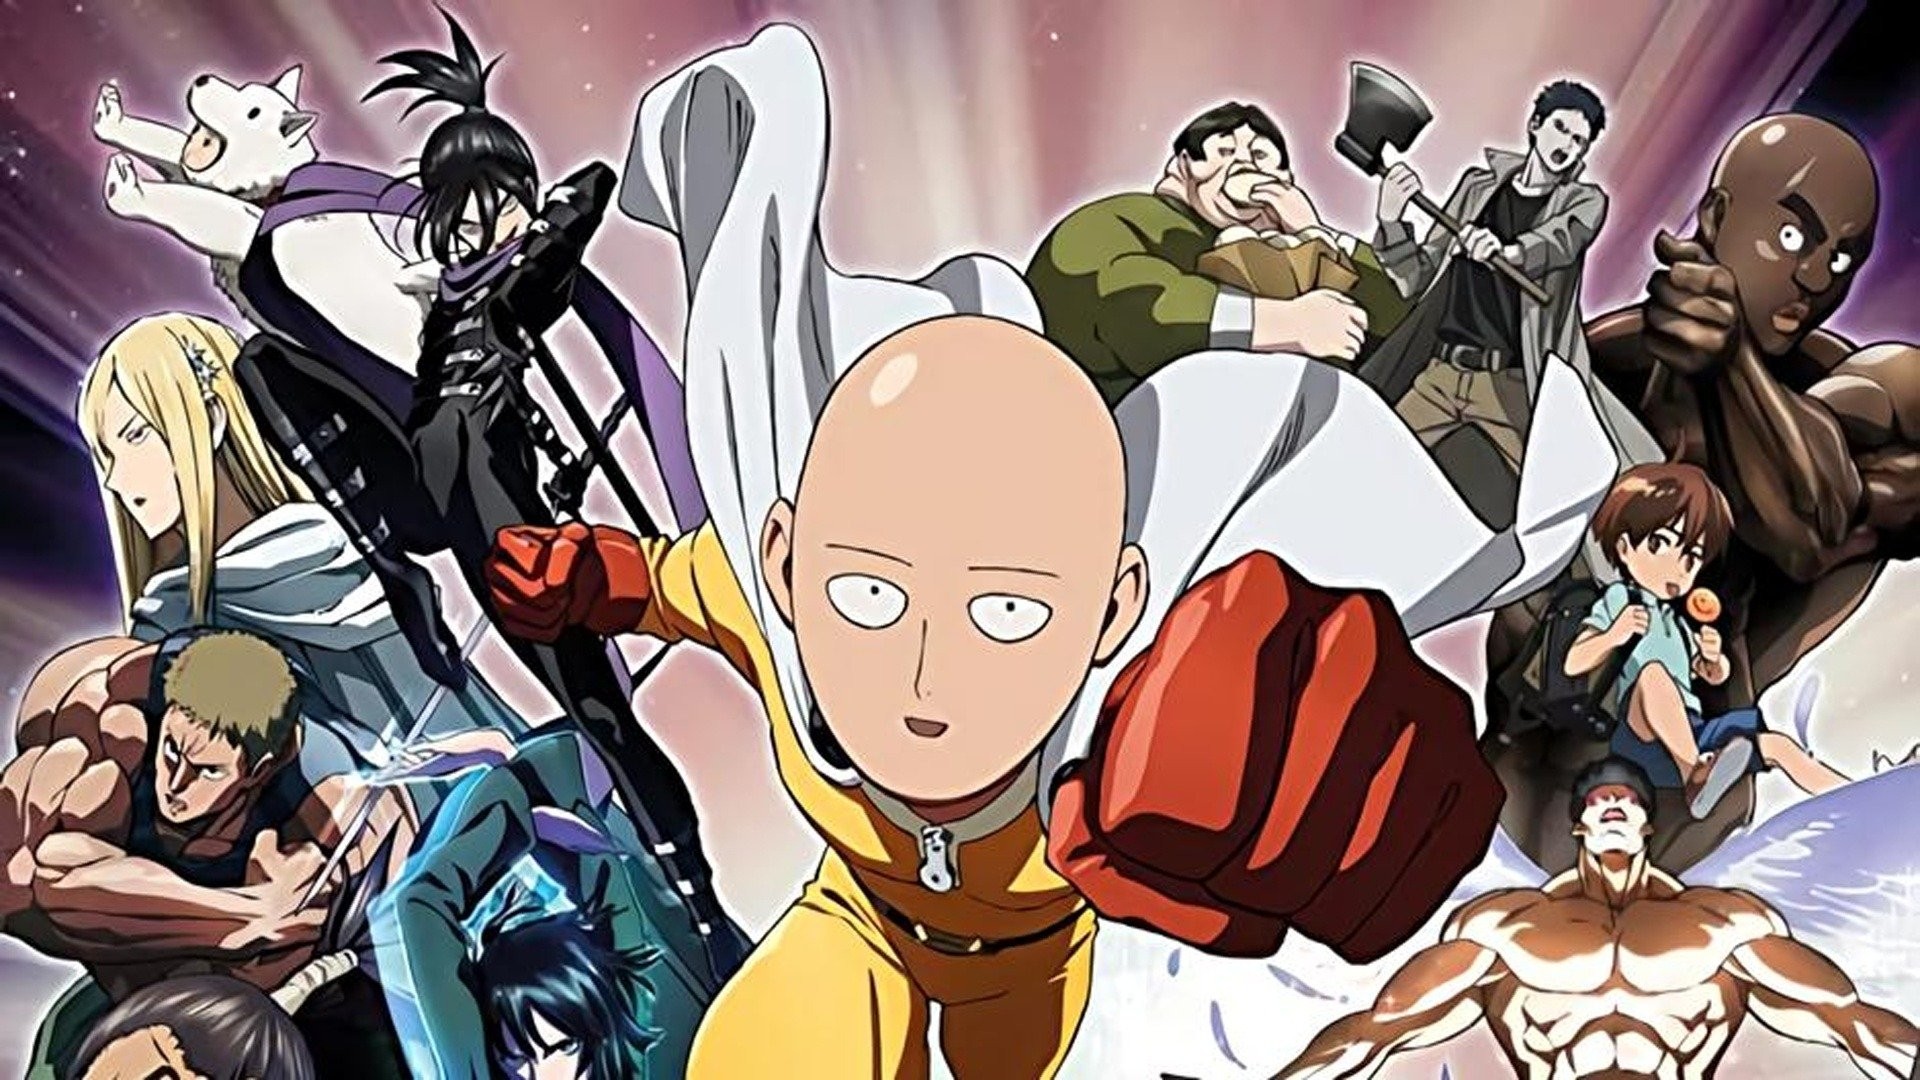 Review: One Punch Man Season 2 (Blu-Ray) - Anime Inferno